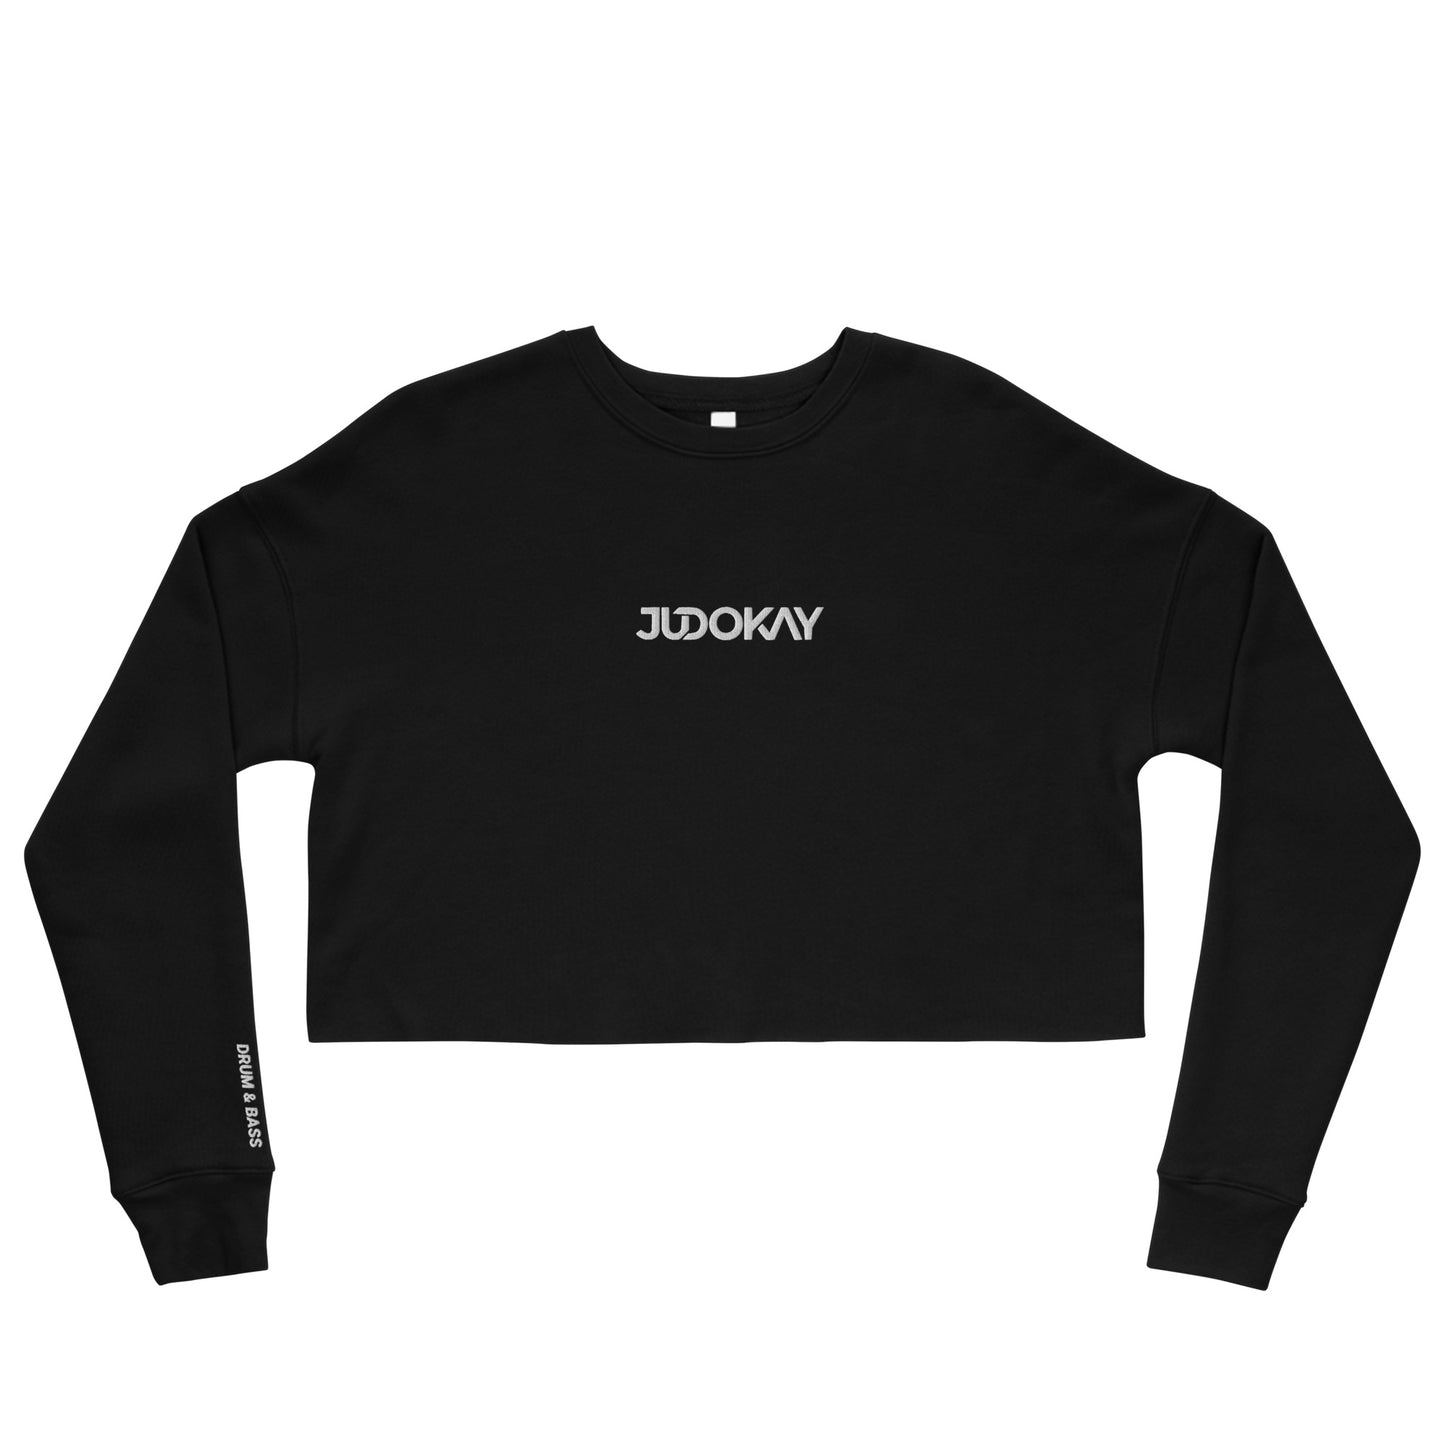 Crop Sweatshirt | Judokay Embroidery + Drum & Bass Lettering